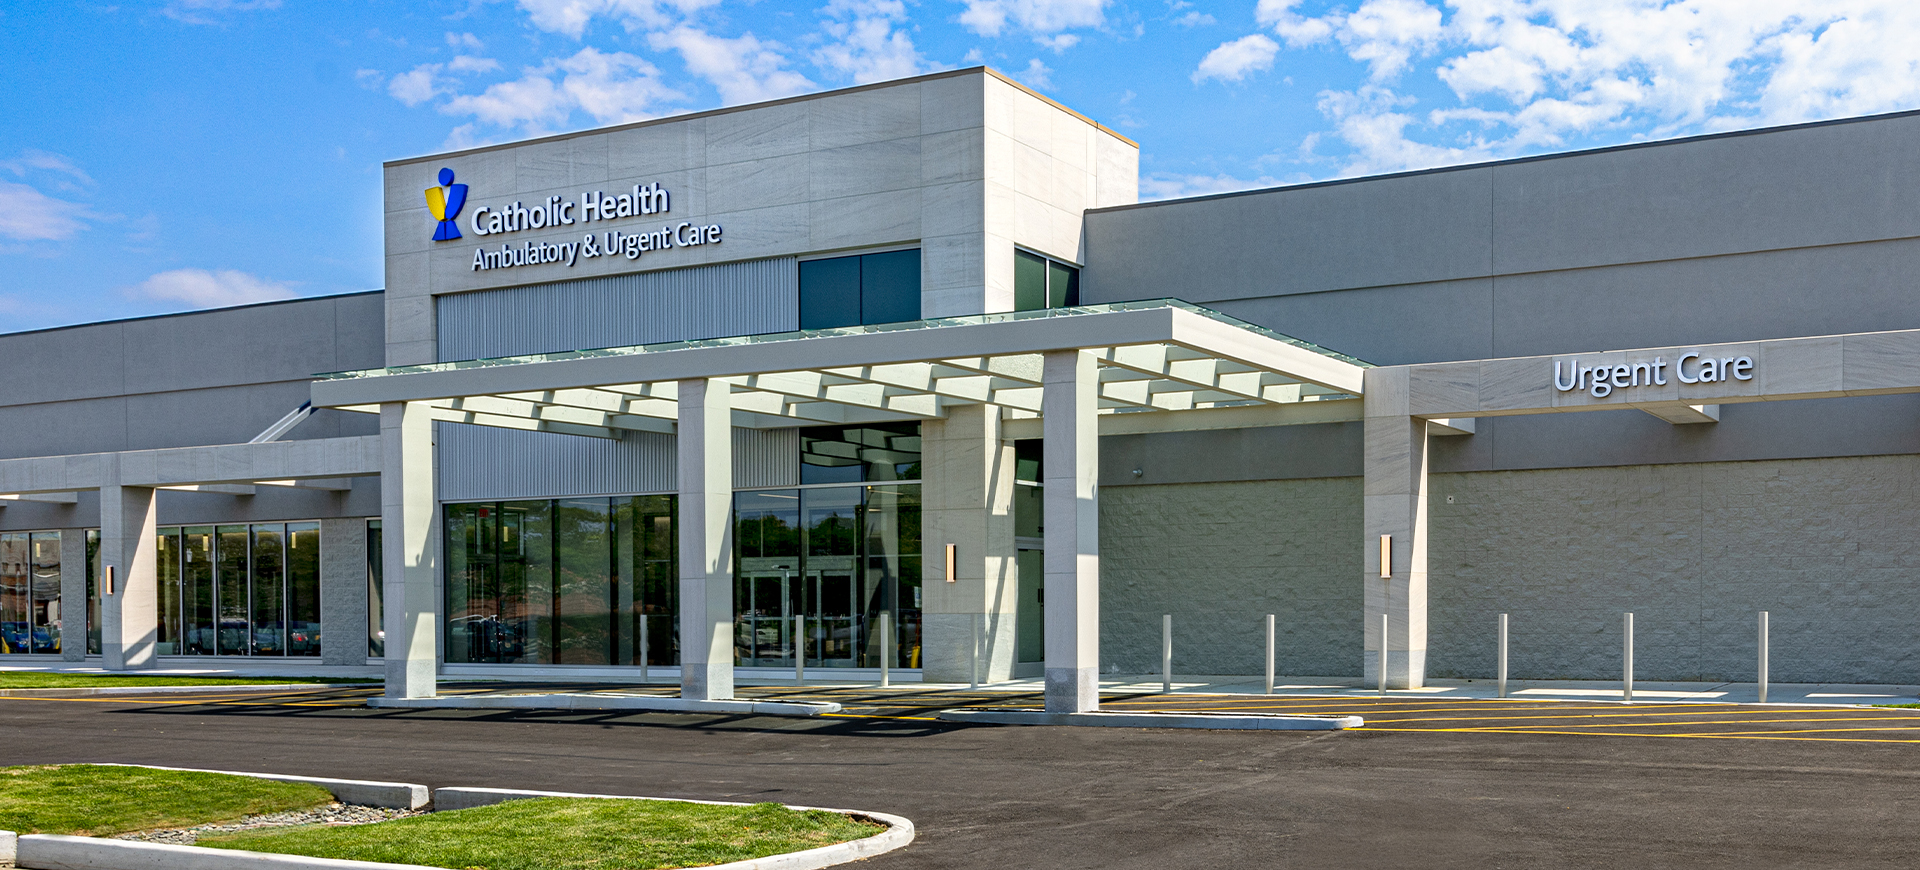       	        
	  	  Catholic Health Ambulatory Care at Centereach
	  	  
	        